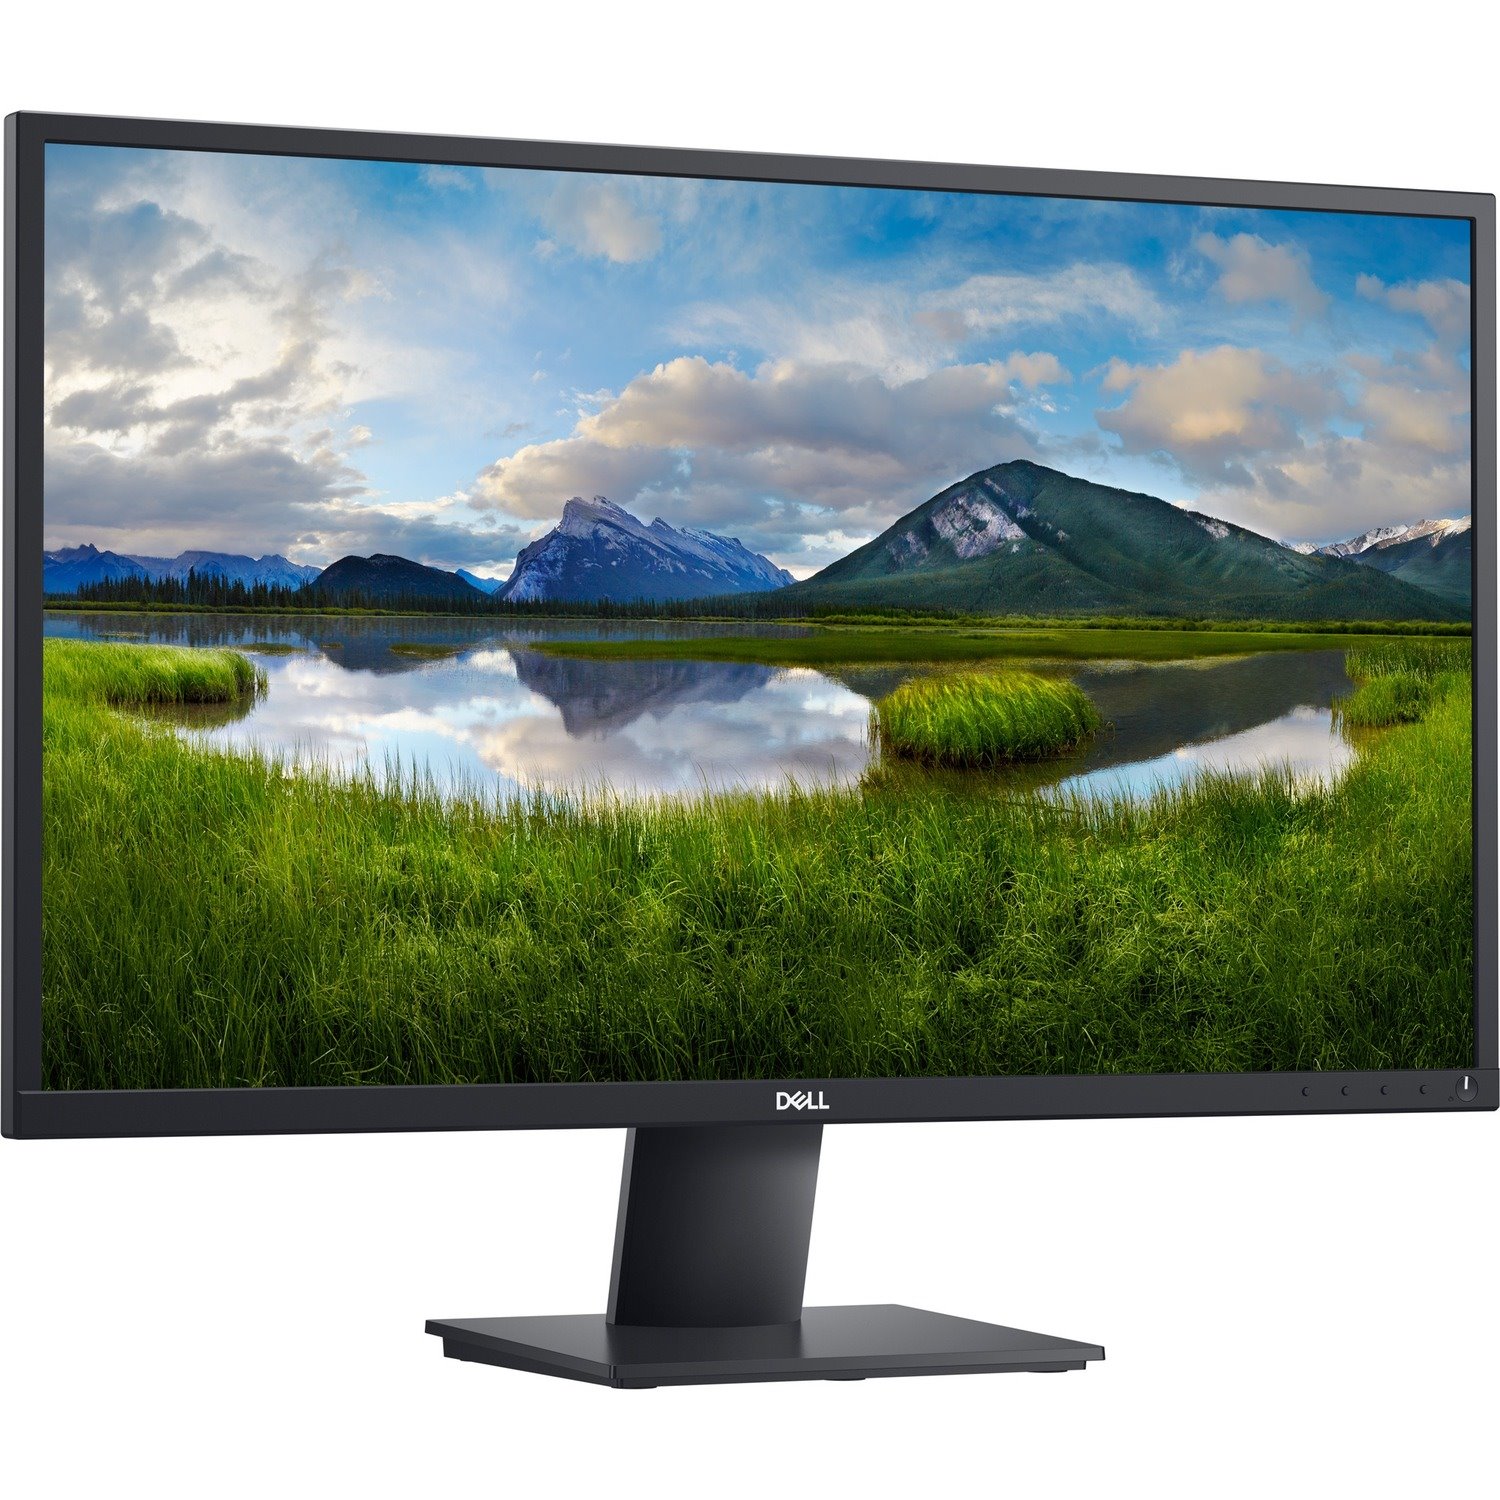 Dell E2720H 27" Full HD LED LCD Monitor - 16:9 - Black